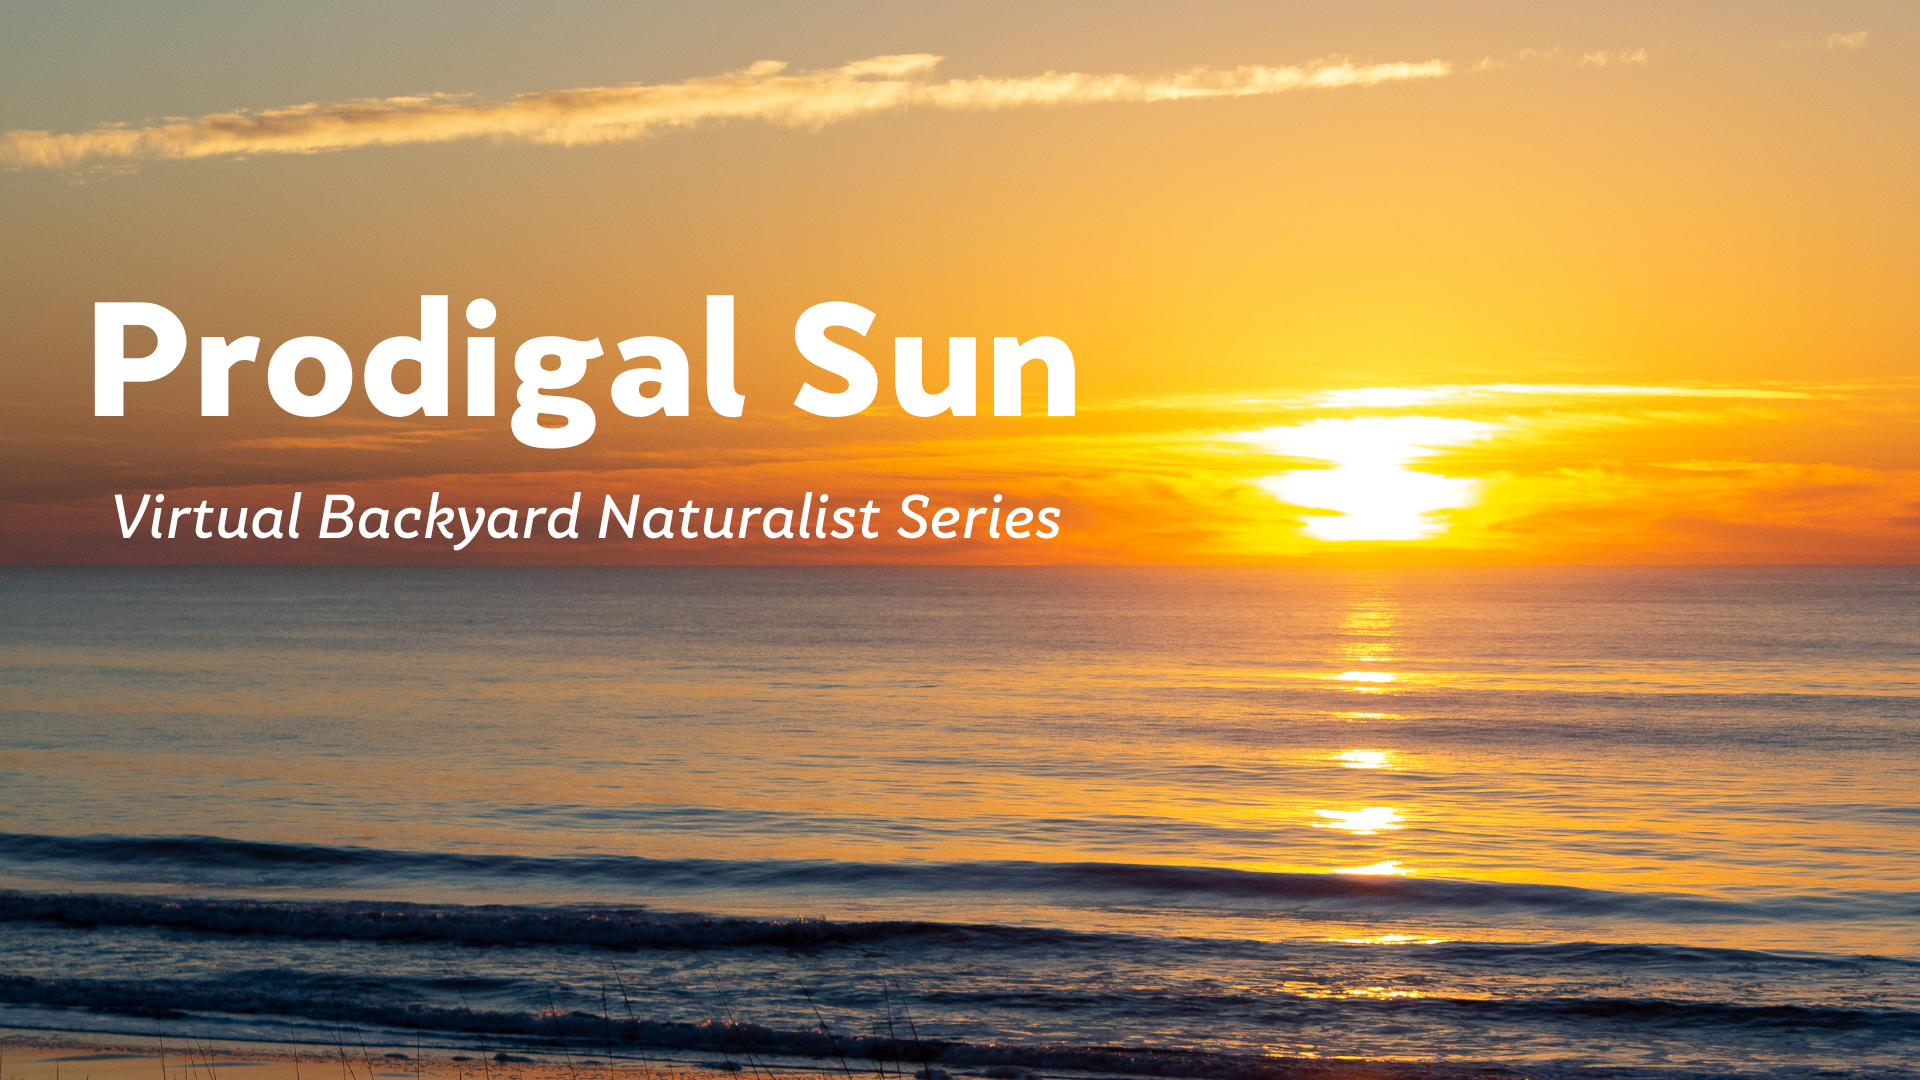 Prodigal Sun - Virtual Backyard Naturalist Series